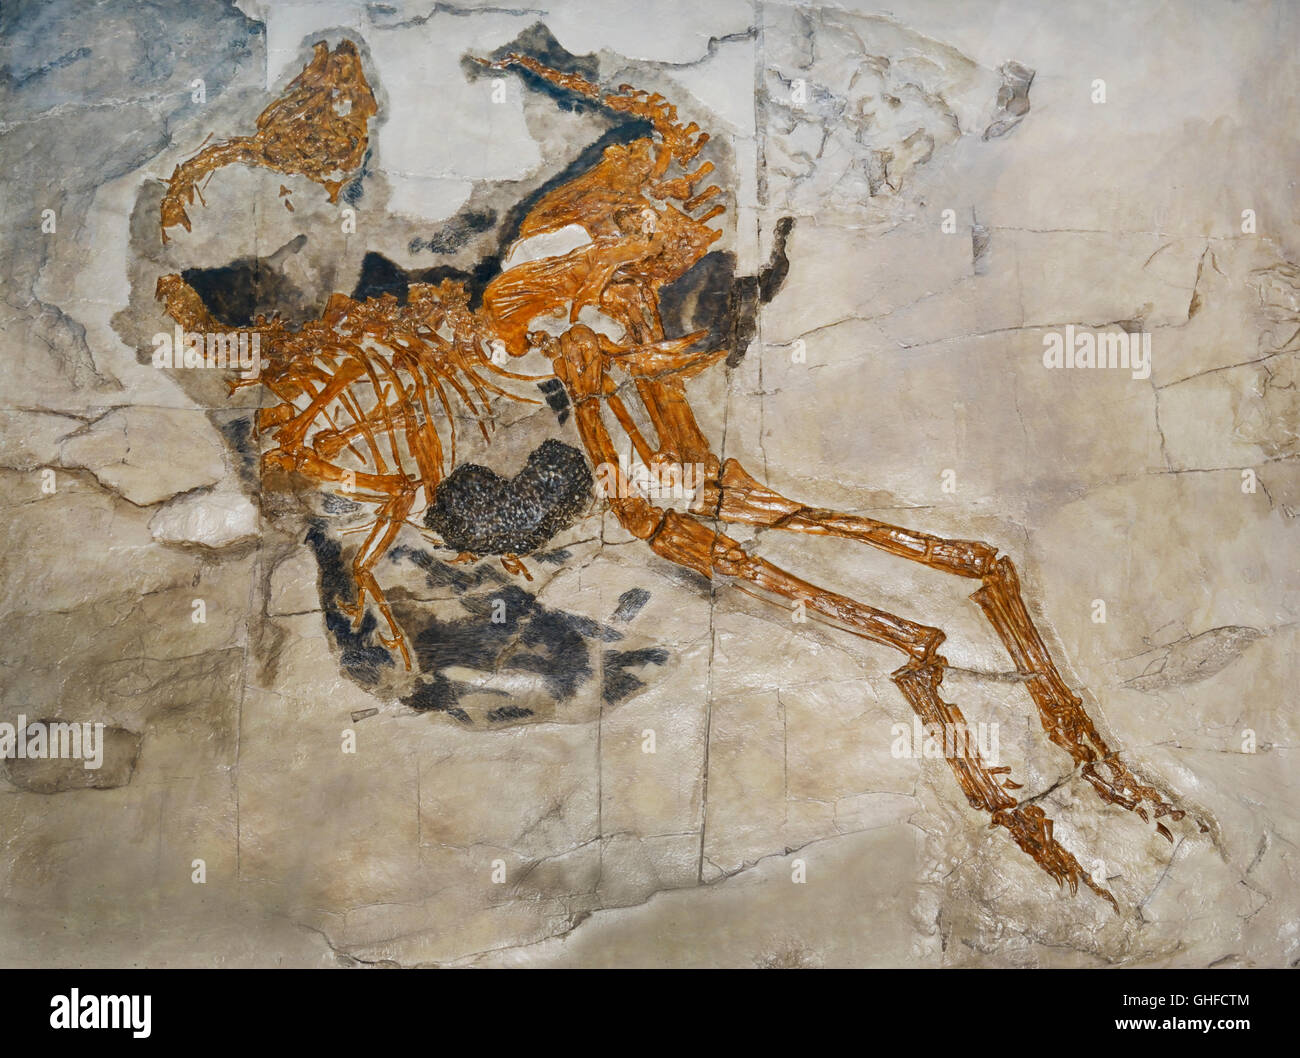 Caudipteryx zoui, la primera no-aves fósiles de dinosaurios encontrados con plumas, moderno temprano Cretácico, Liaoning Prov. China Foto de stock